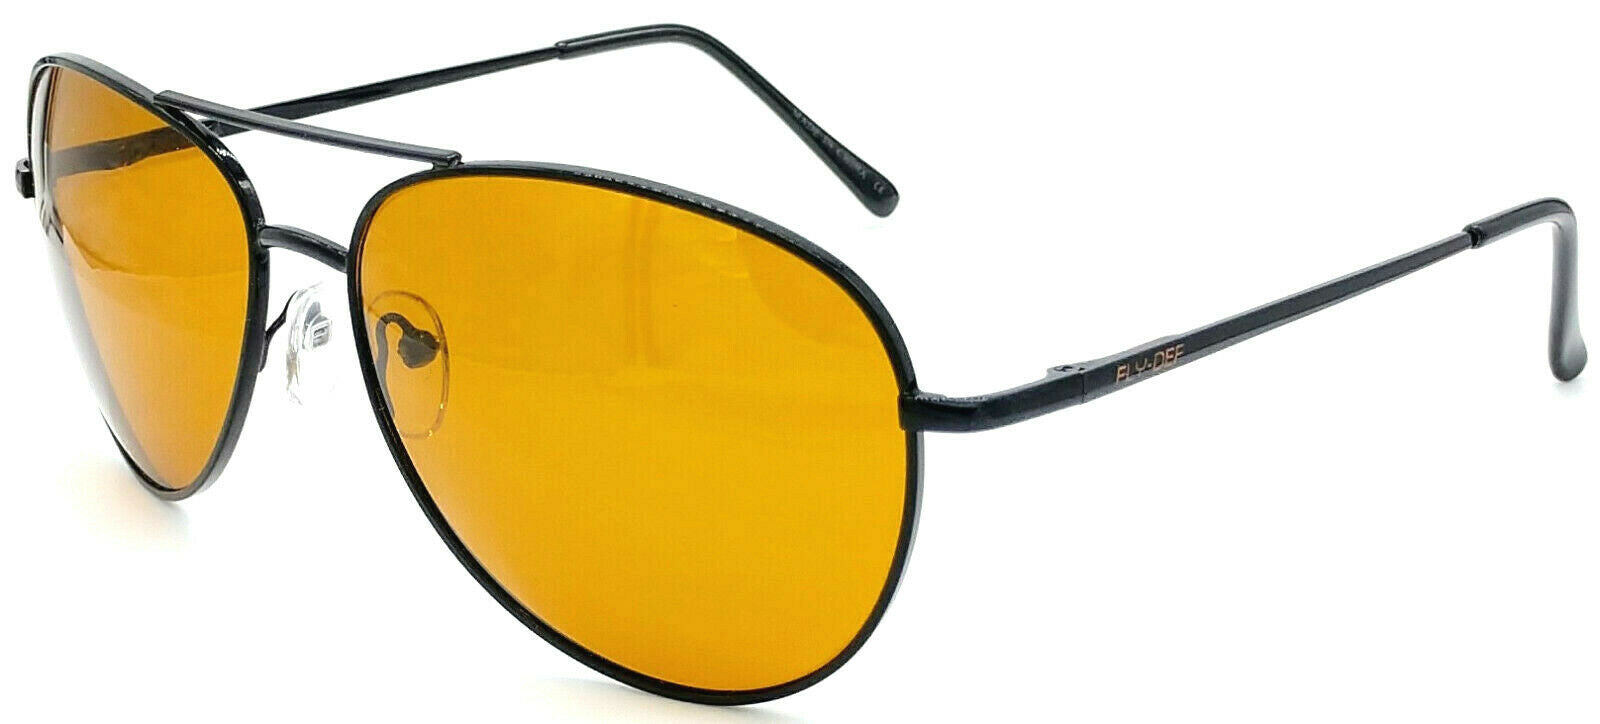 Envision Eyewear Fly-def High-Def Polarized Fishing Sunglasses Gold Lens Metal Teardrop Aviator - Black, adult Unisex, Size: One Size